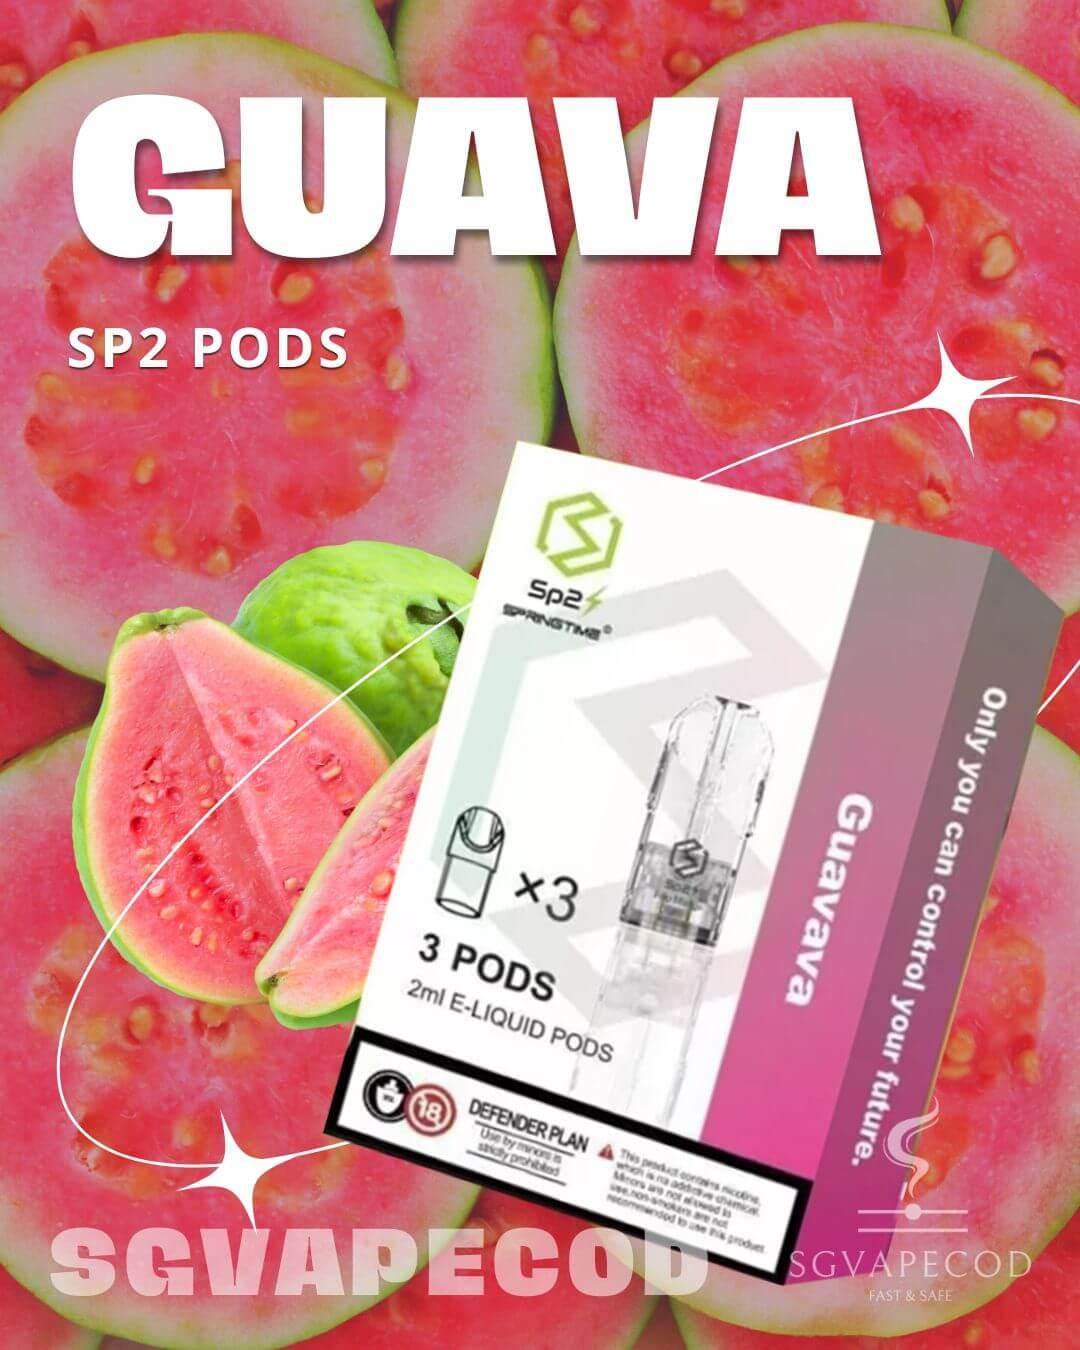 Sp2-Pod-Guava-(SG VAPE COD)